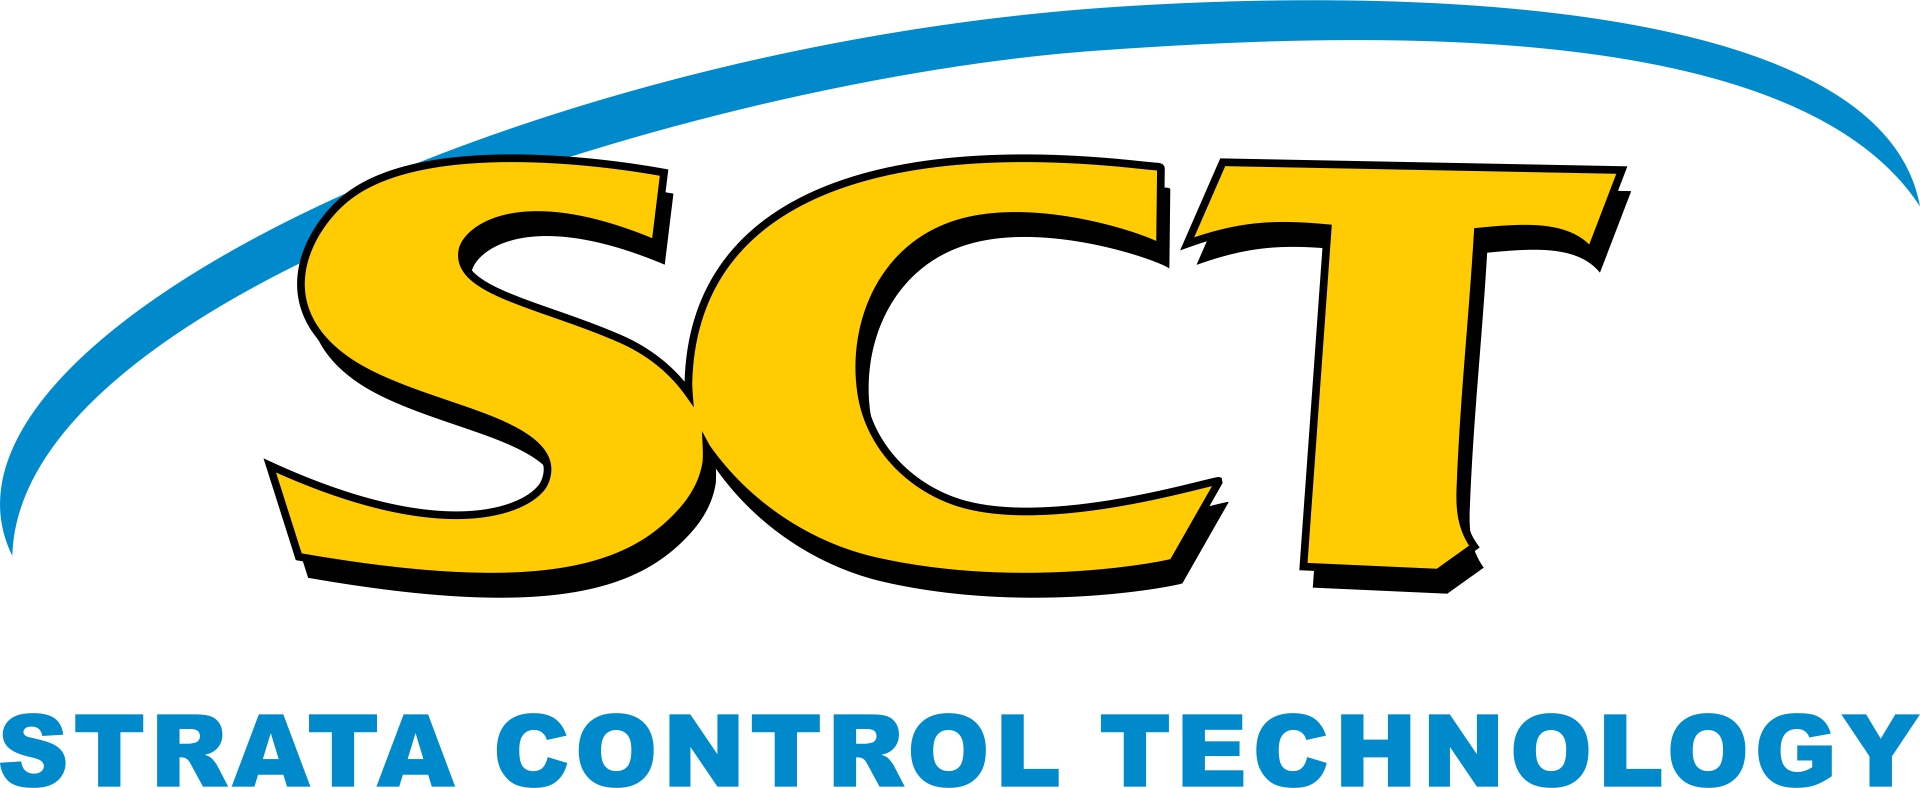 Strata Control Technology